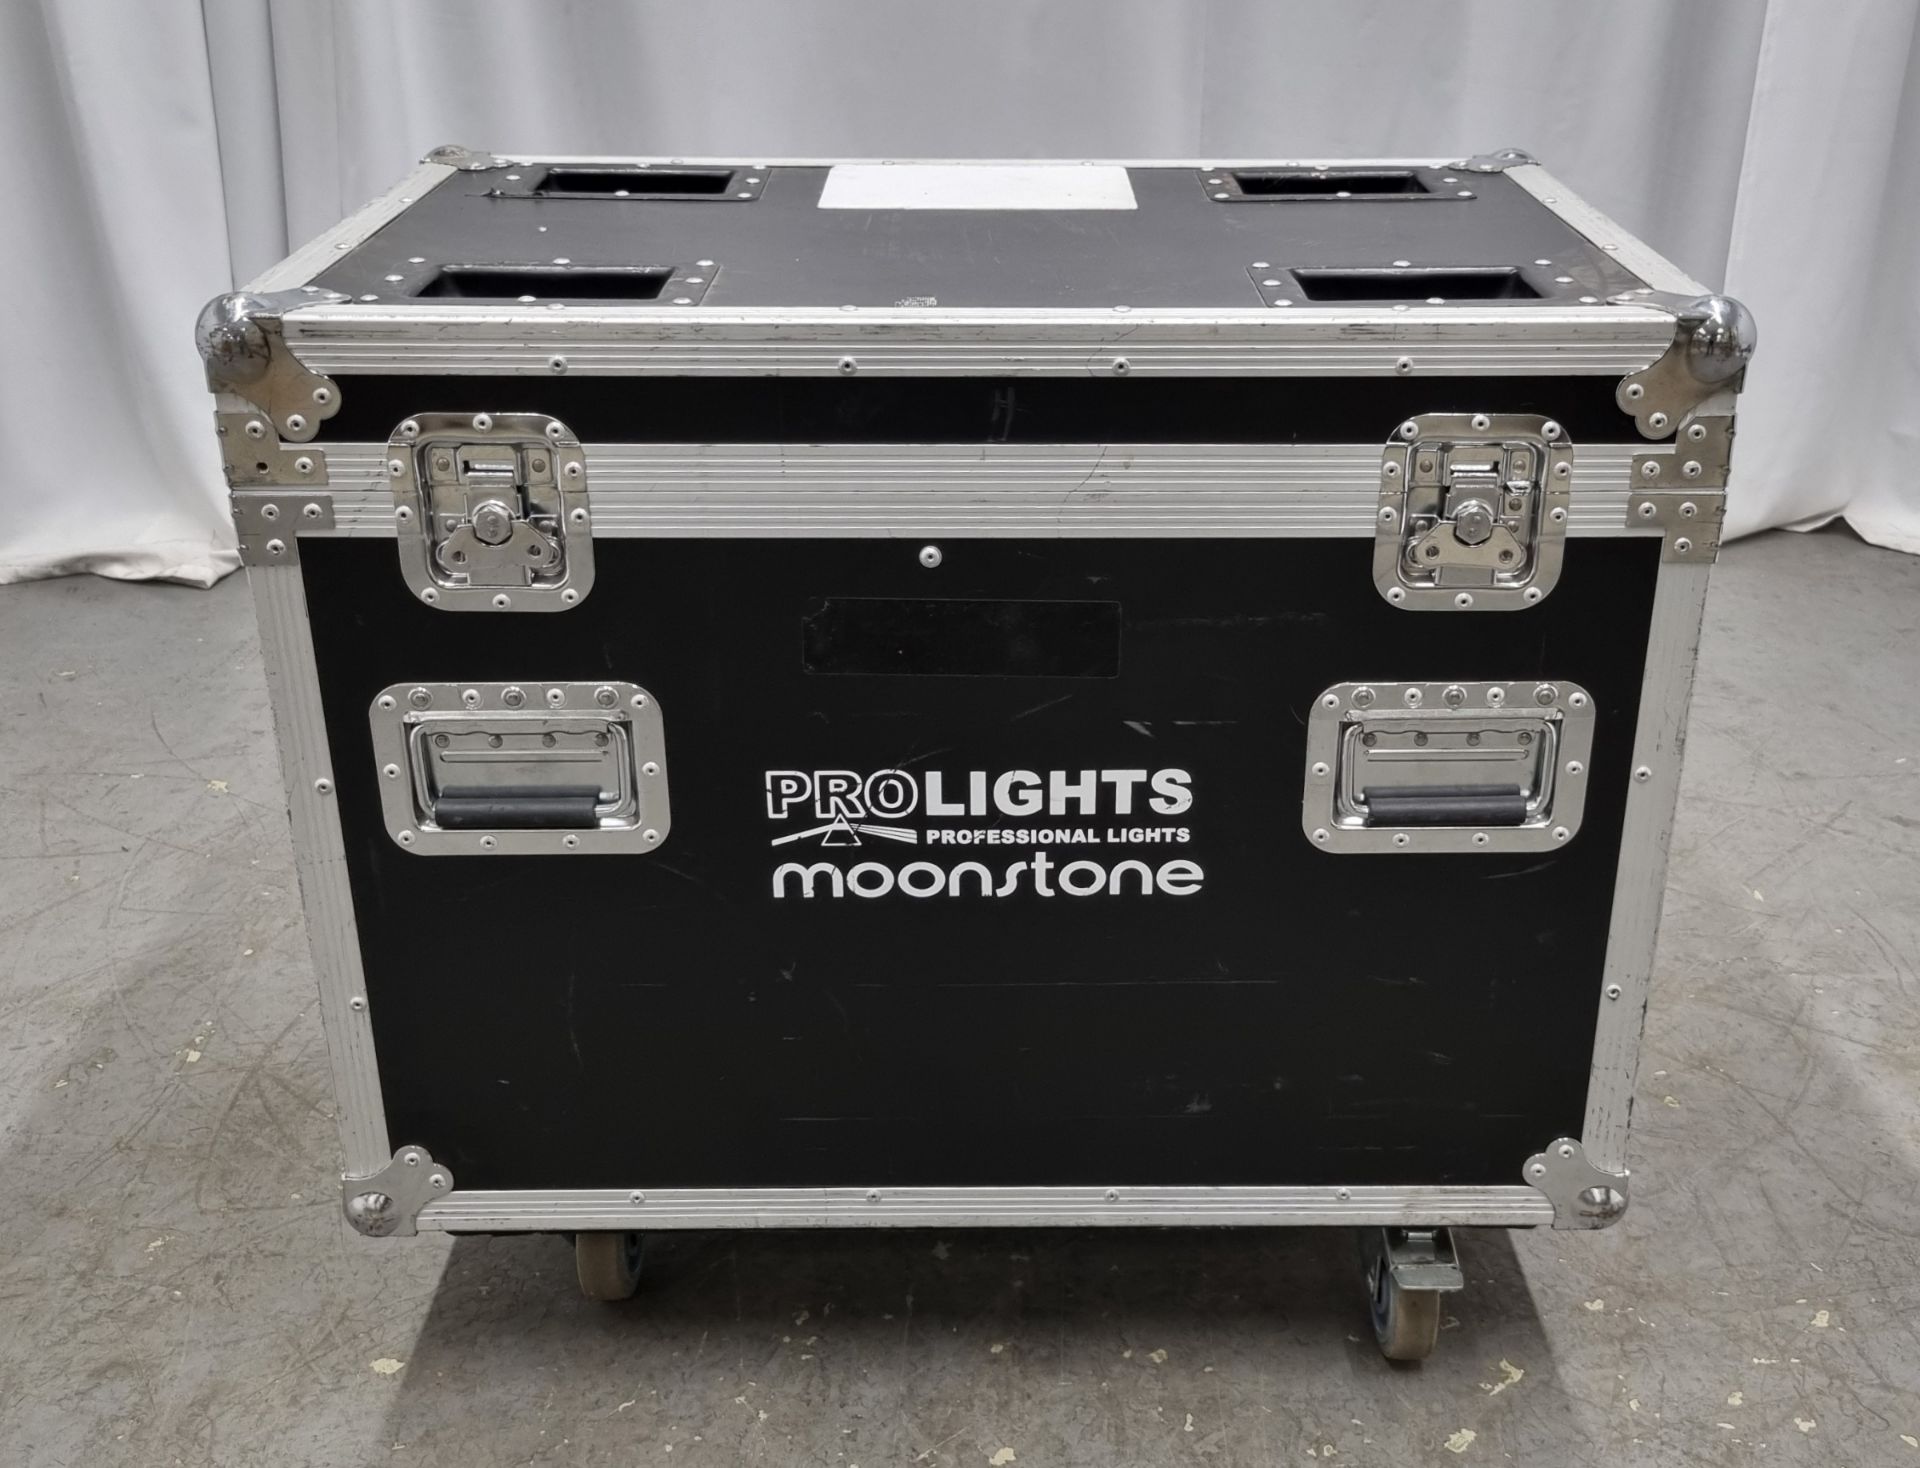 2x Prolights Moonstone LED spot moving head lights with flight case - Image 13 of 13